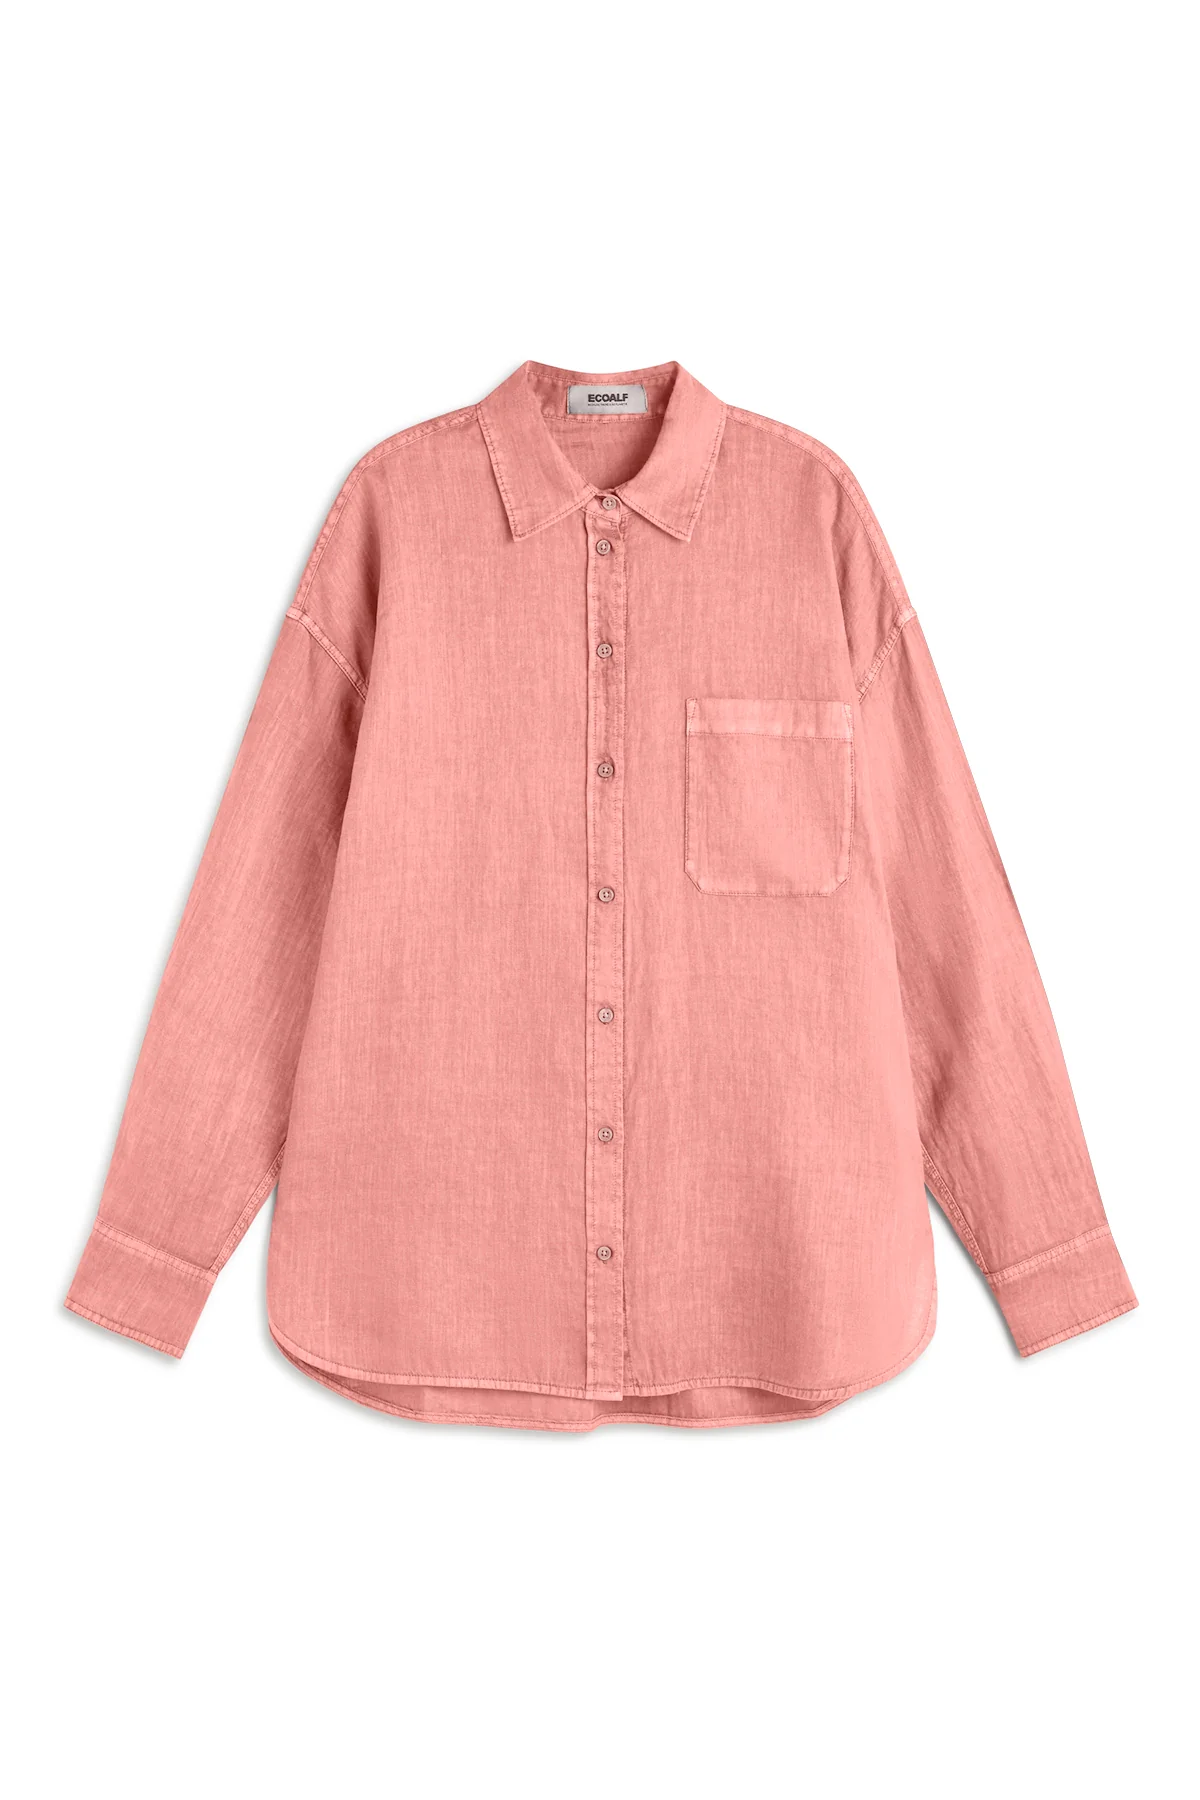 ECOALF camisa manga larga en lino color salmón - 5